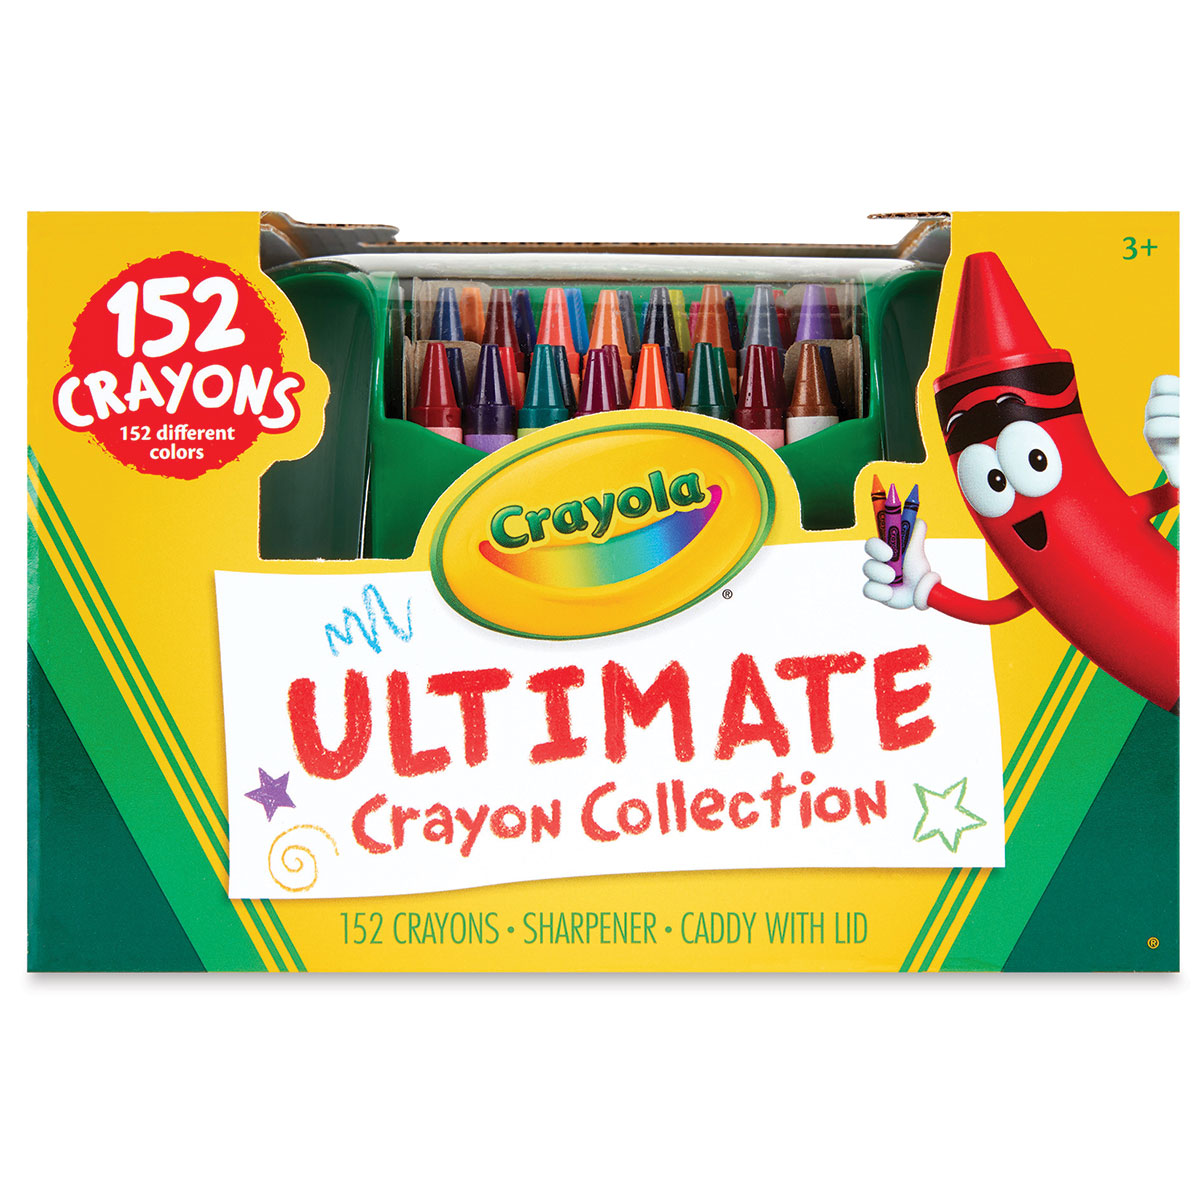 Crayola Crayons - Classpack, Pkg of 800, 16 Colors